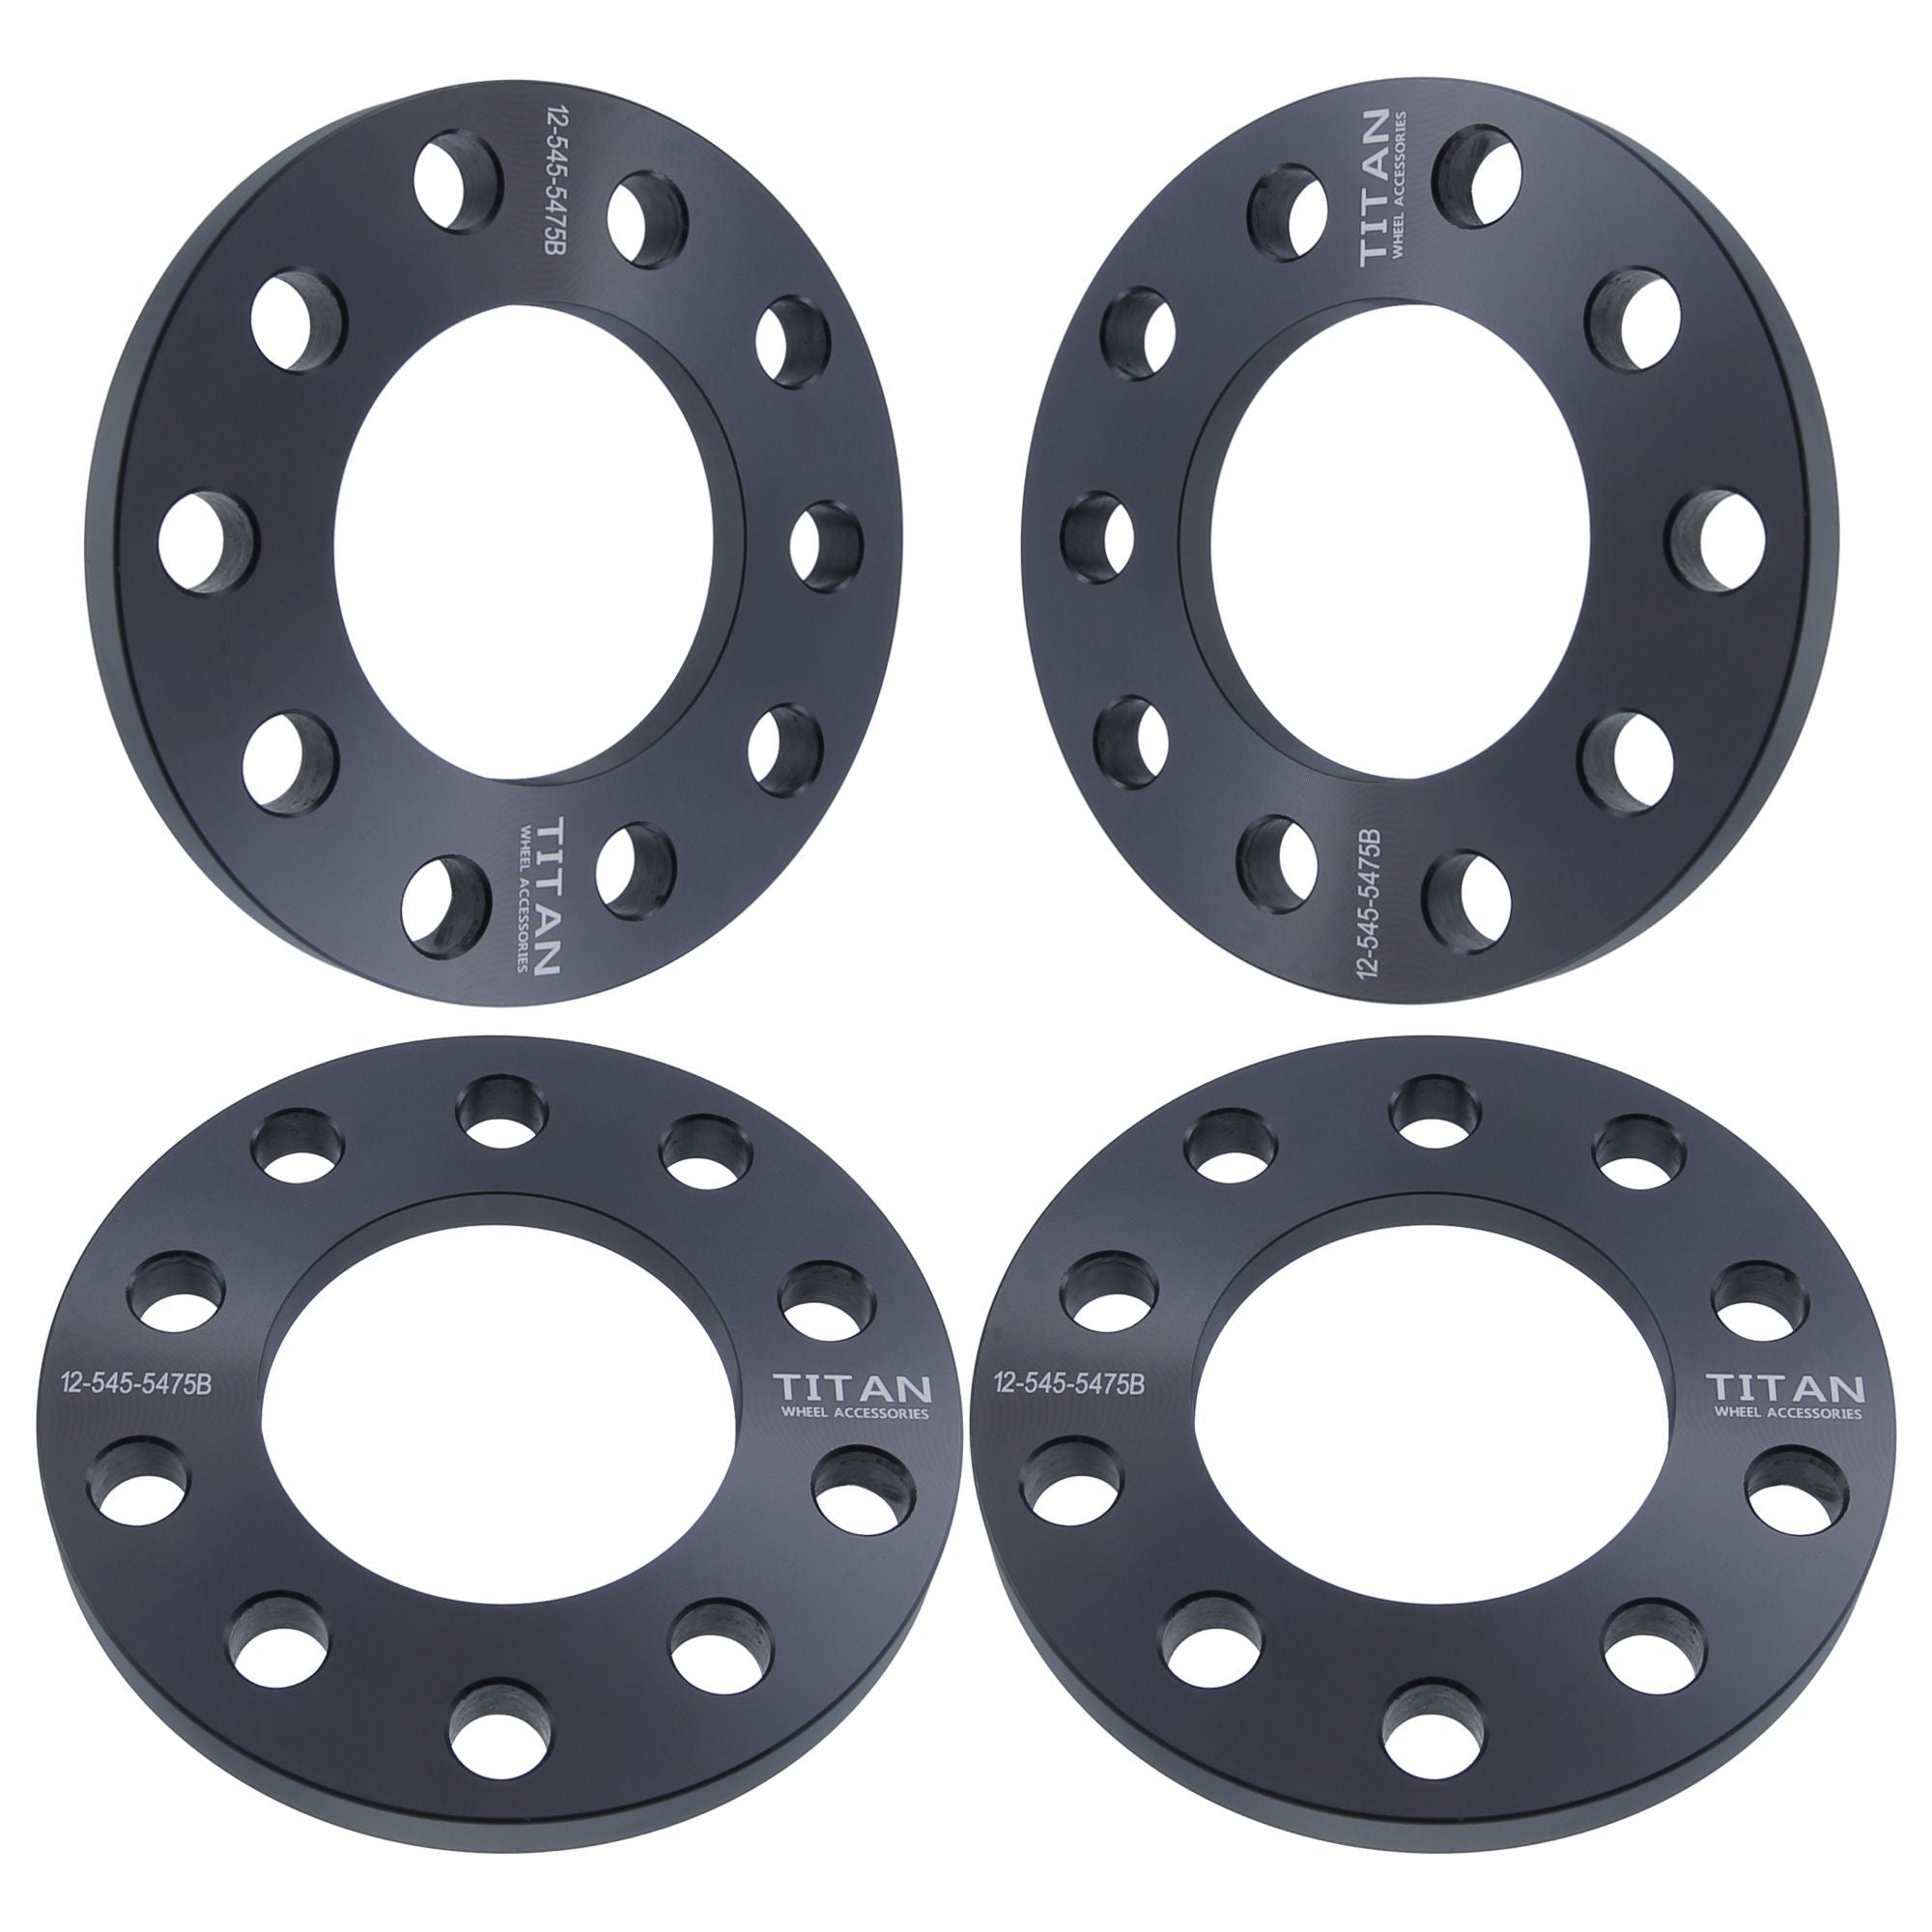 1/2 Inch Wheel Spacers for Wrangler TJ YJ XJ | 5x4.5 | Titan Wheel